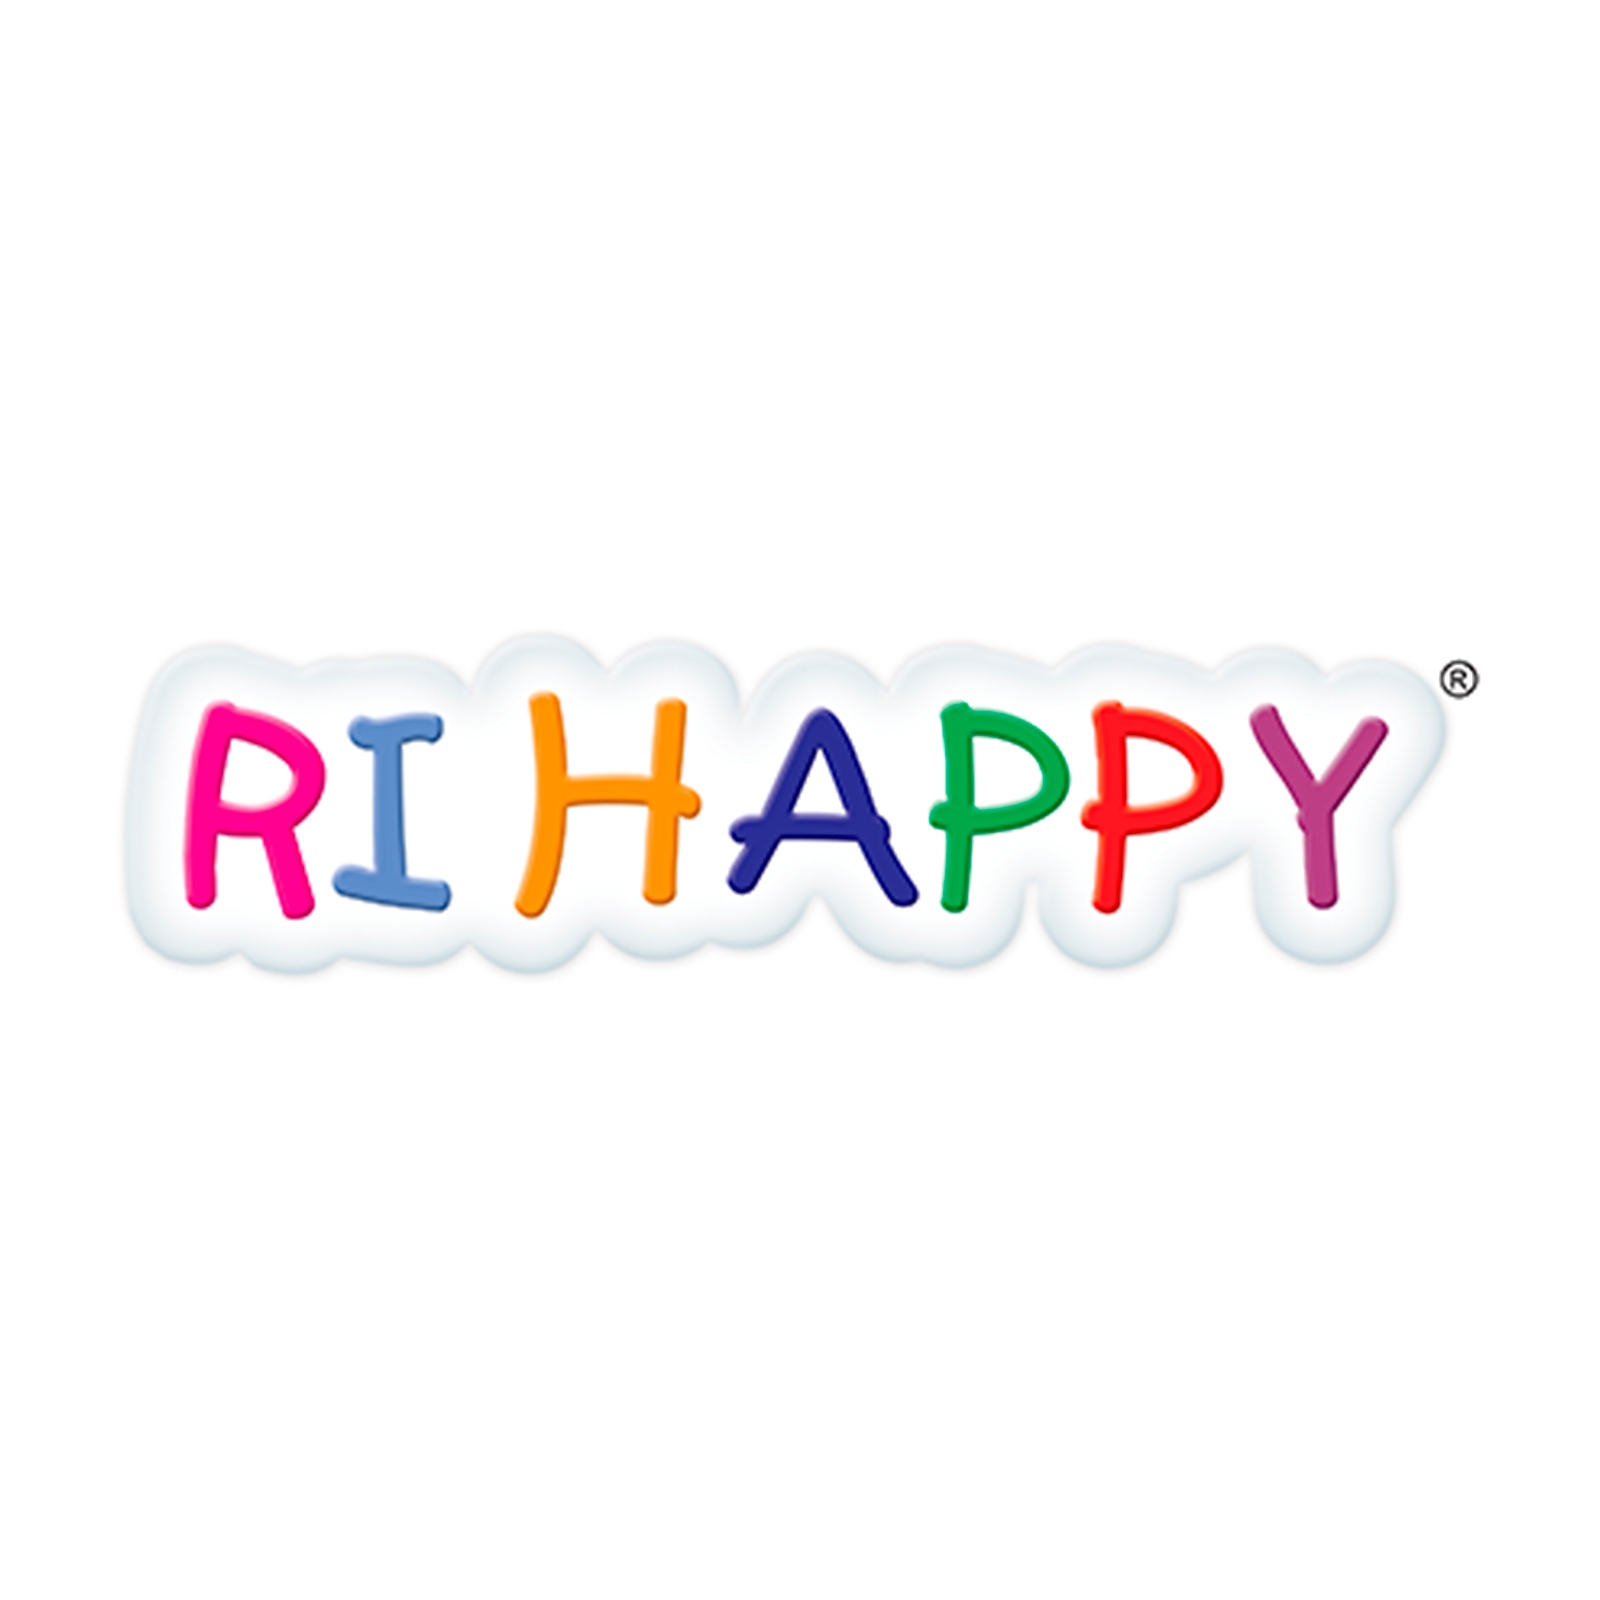 Returnal PS5 Ri Happy